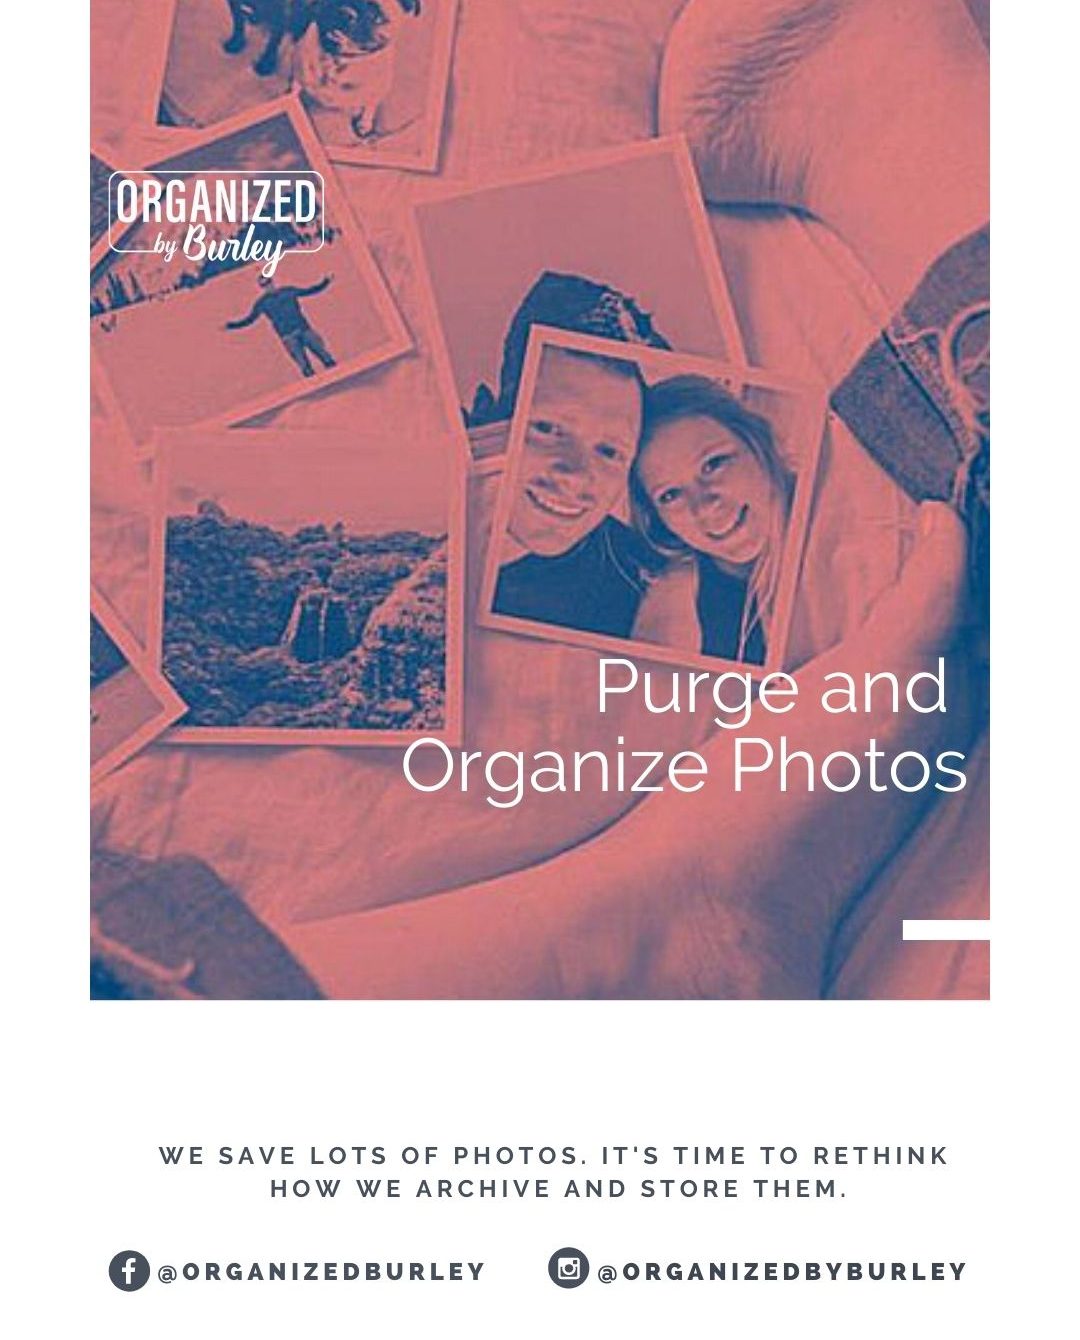 How to Organize Your Digital Photos